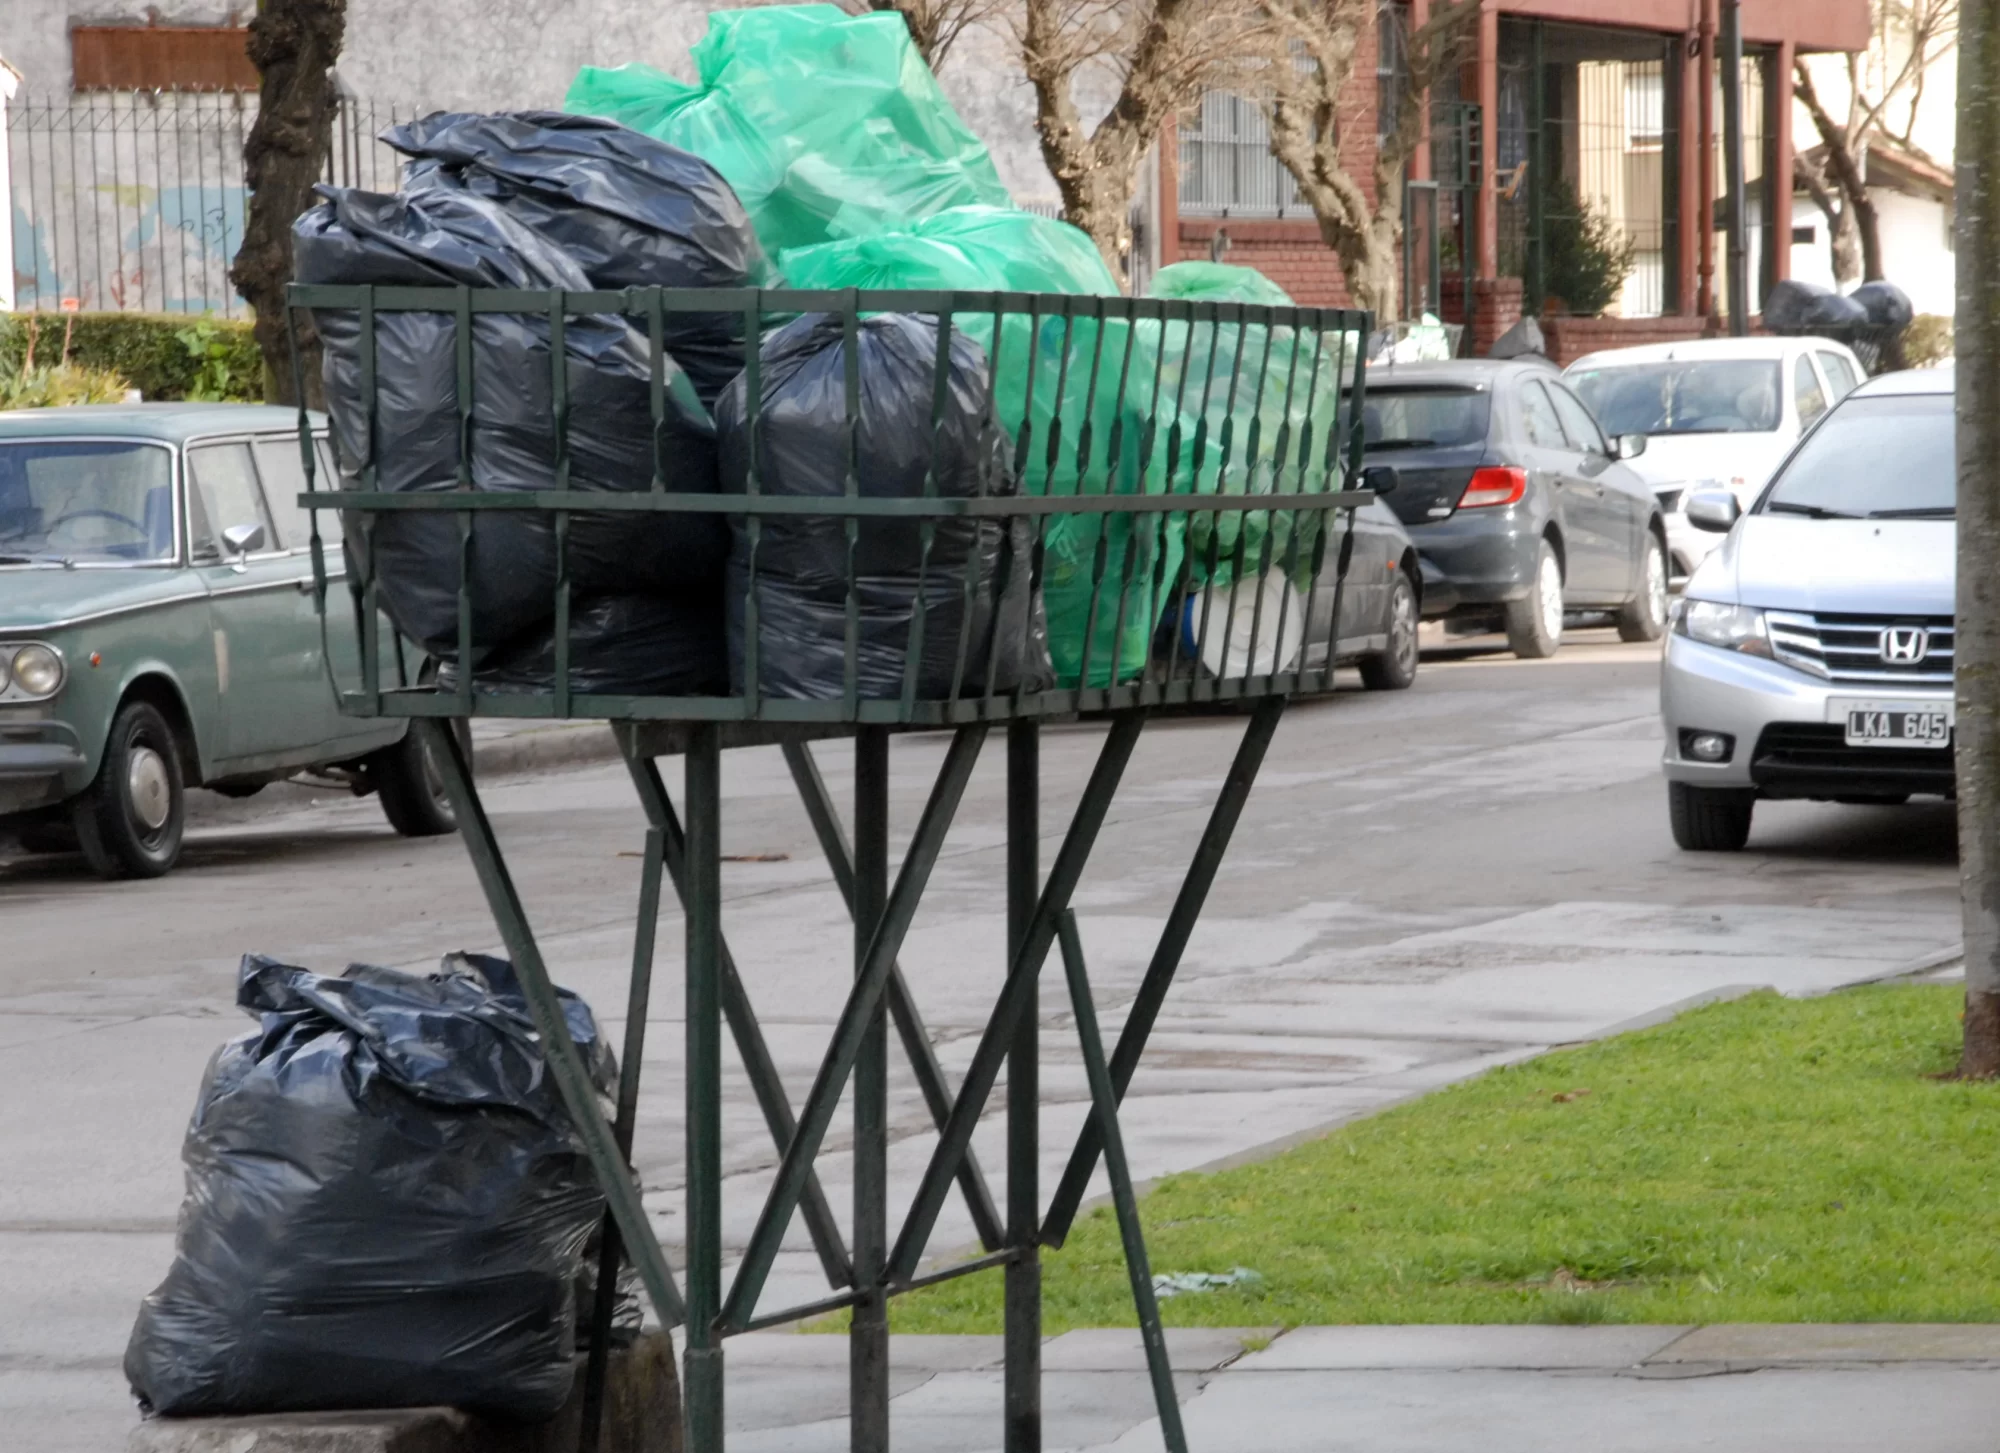 Recolección diferenciada de residuos: dos experiencias para llegar a cada vez más barrios